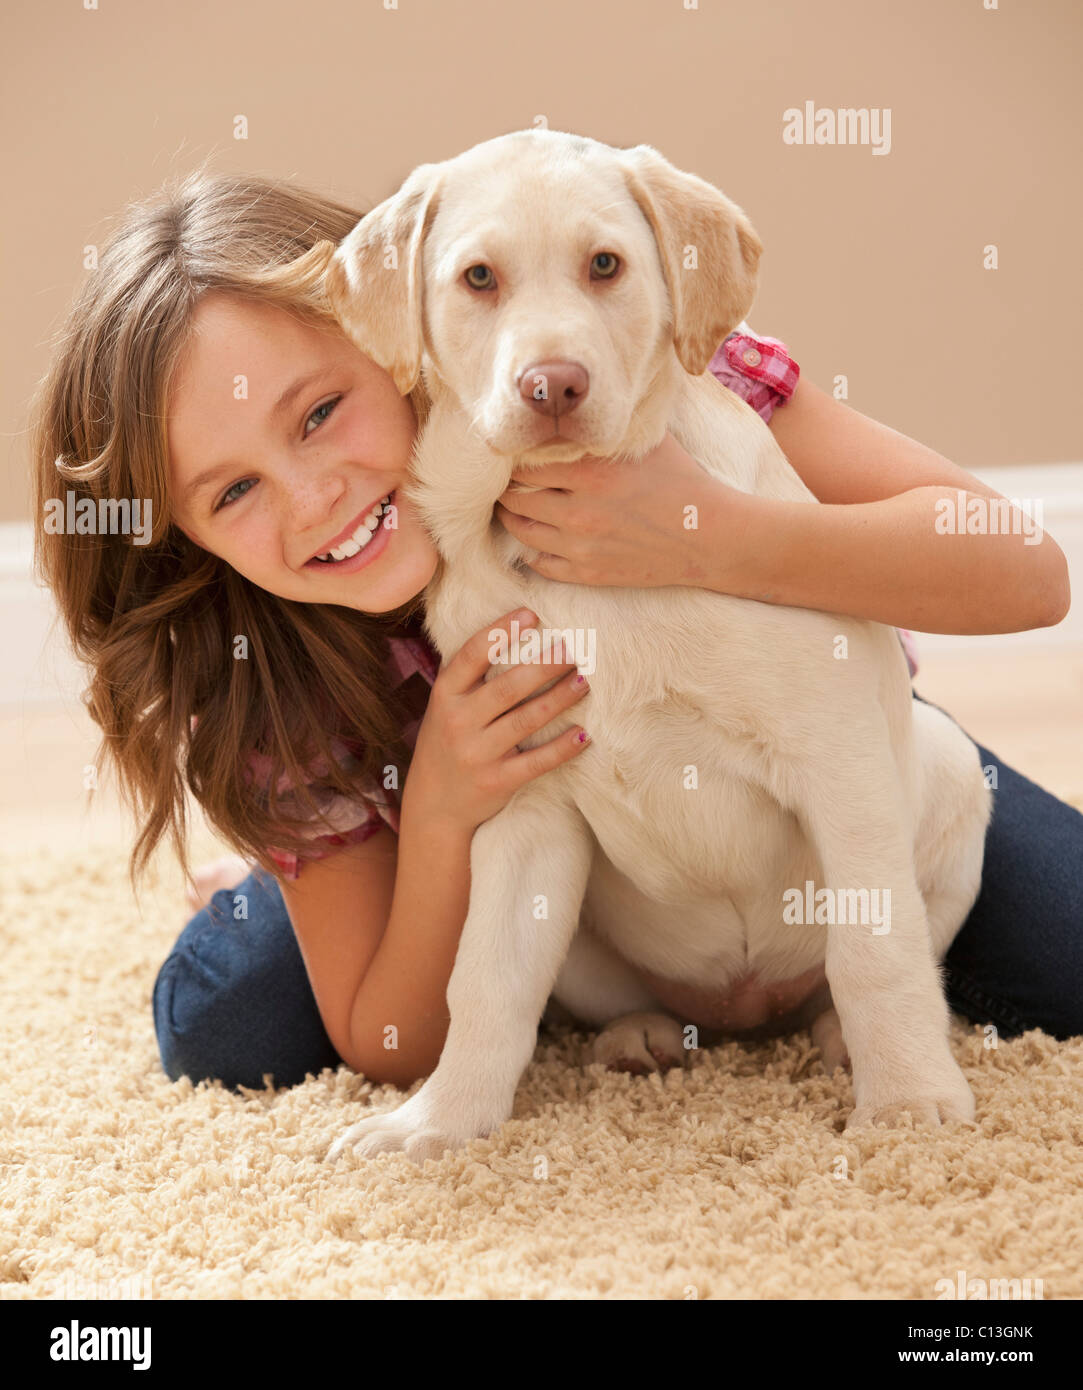 USA, Utah, Lehi, Portrait of girl (10-11) embracing Labrador on carpet Stock Photo